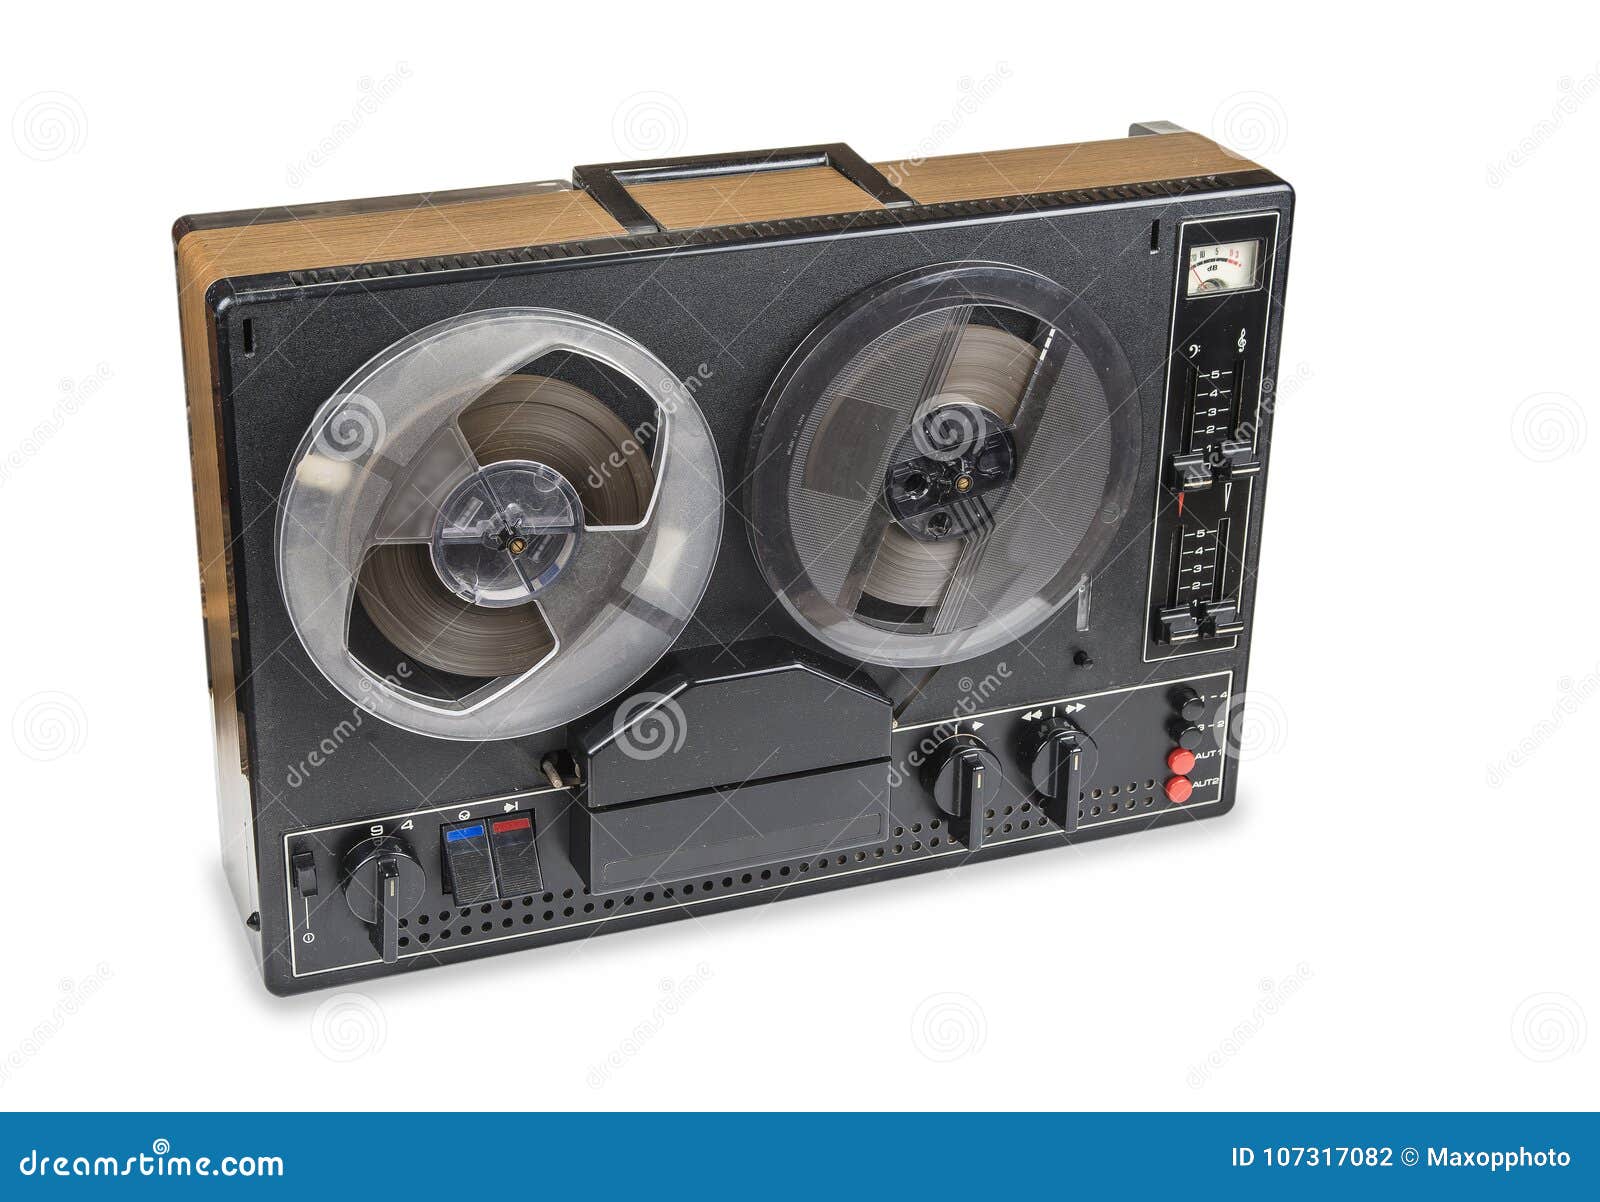 https://thumbs.dreamstime.com/z/old-audio-magnetic-tape-recorder-reel-to-reel-seventies-old-audio-magnetic-tape-recorder-reel-to-reel-seventies-107317082.jpg